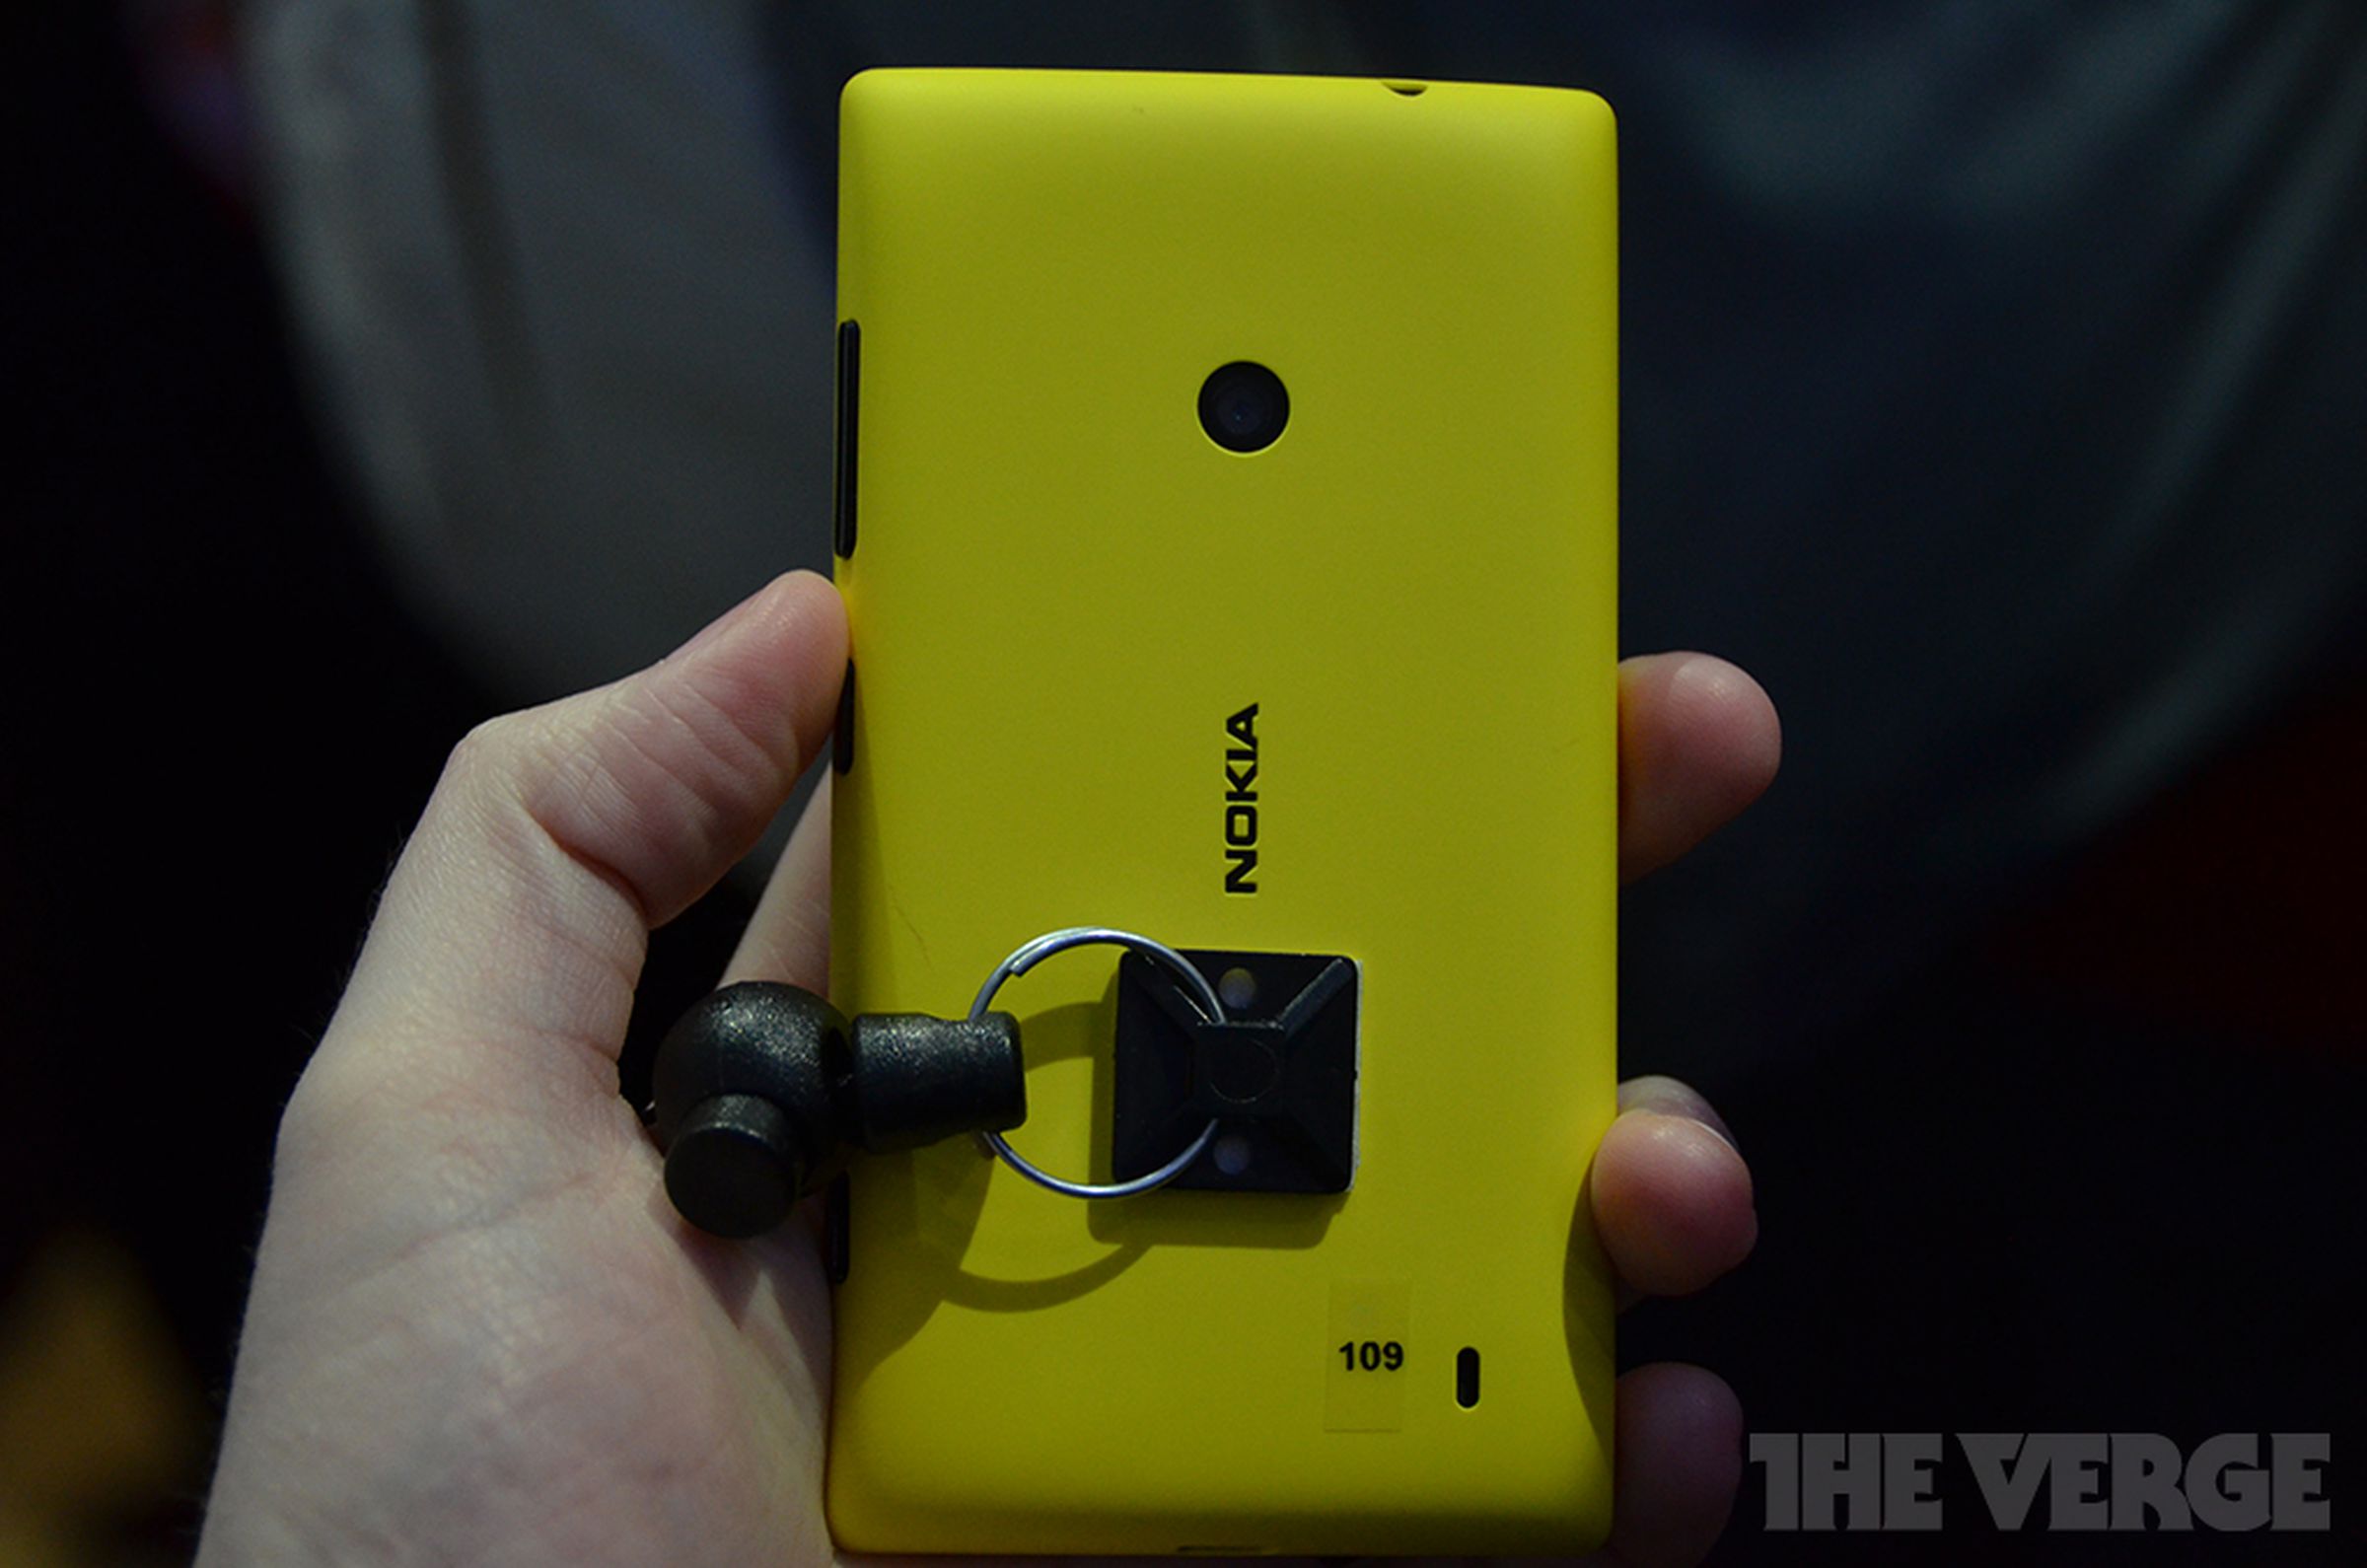 Nokia Lumia 520 hands-on photos